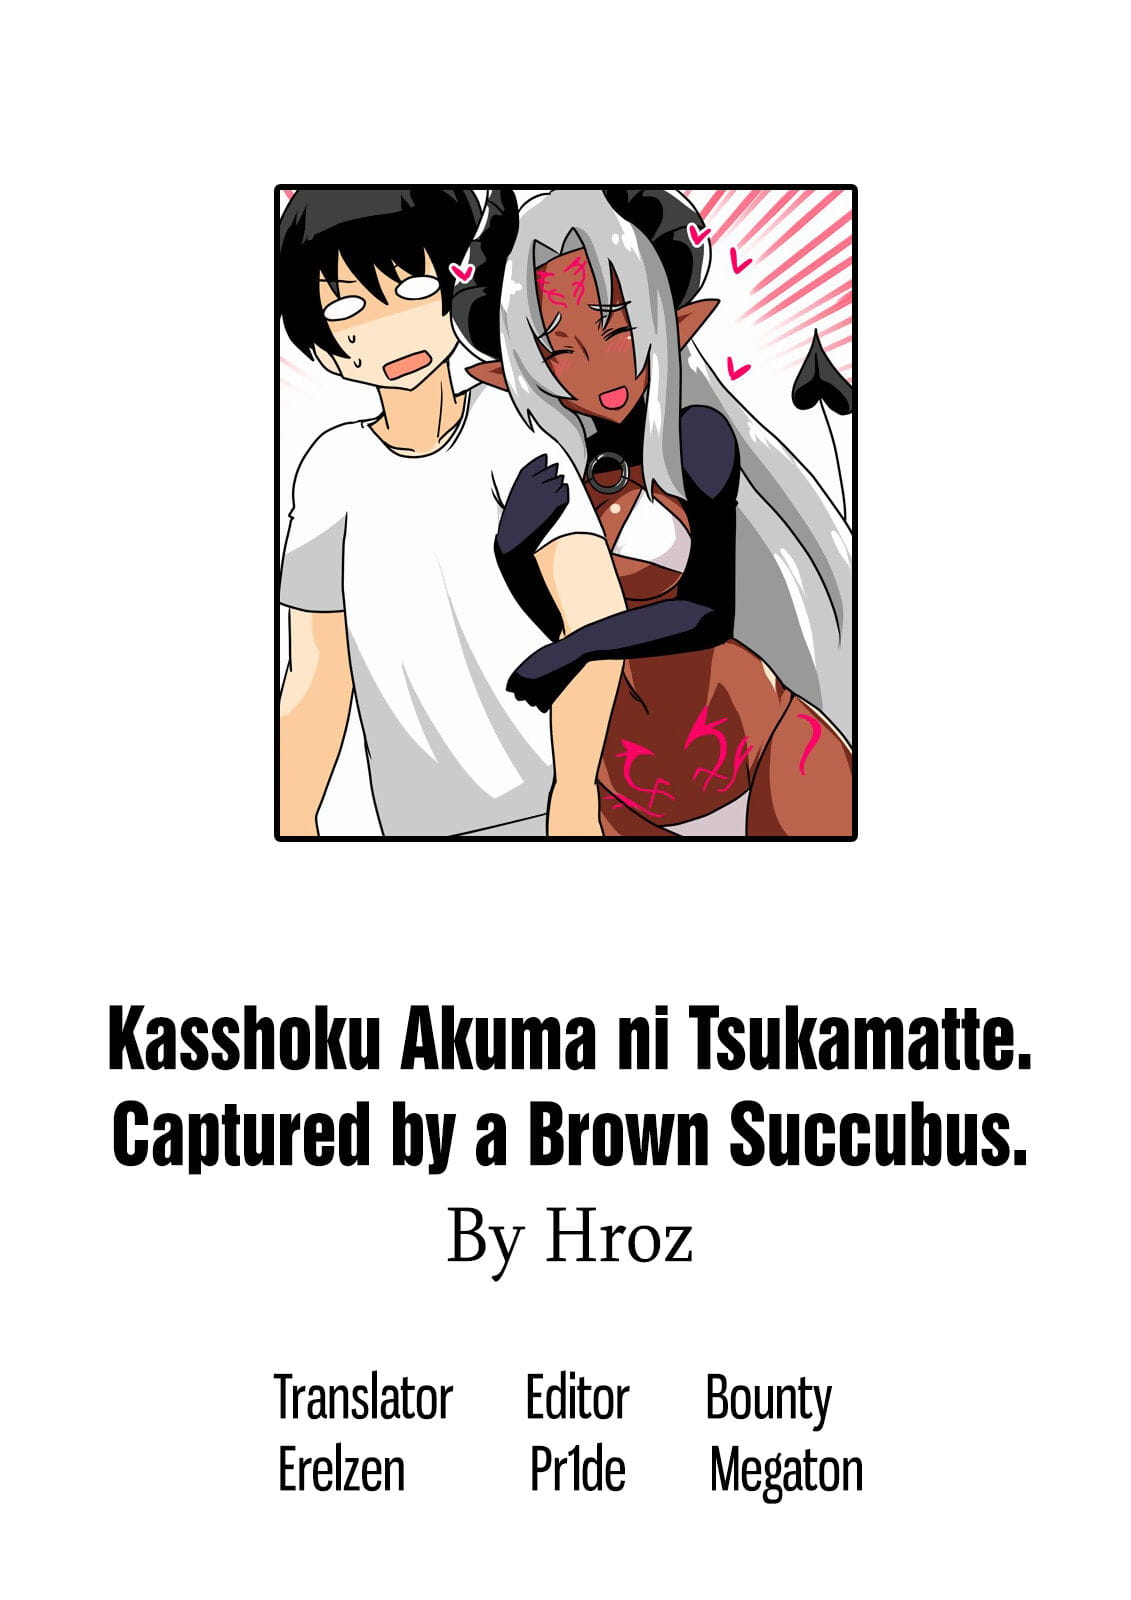 Kasshoku Akuma ni Tsukamatte. - Captured by a Brown Succubus page 1